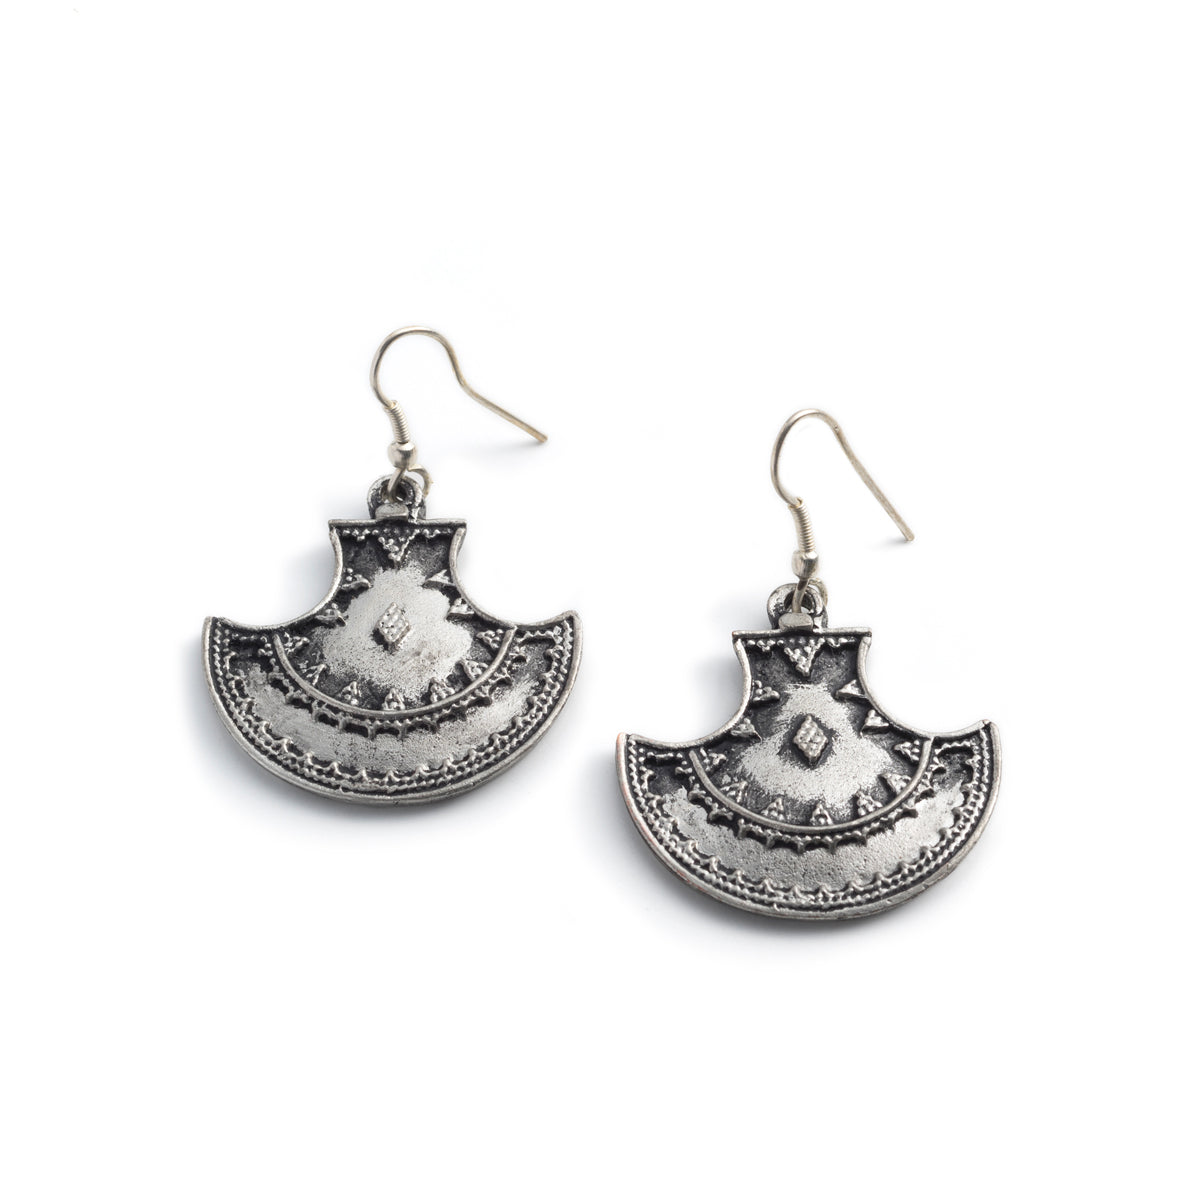 Maratha Queen Earrings - Silver